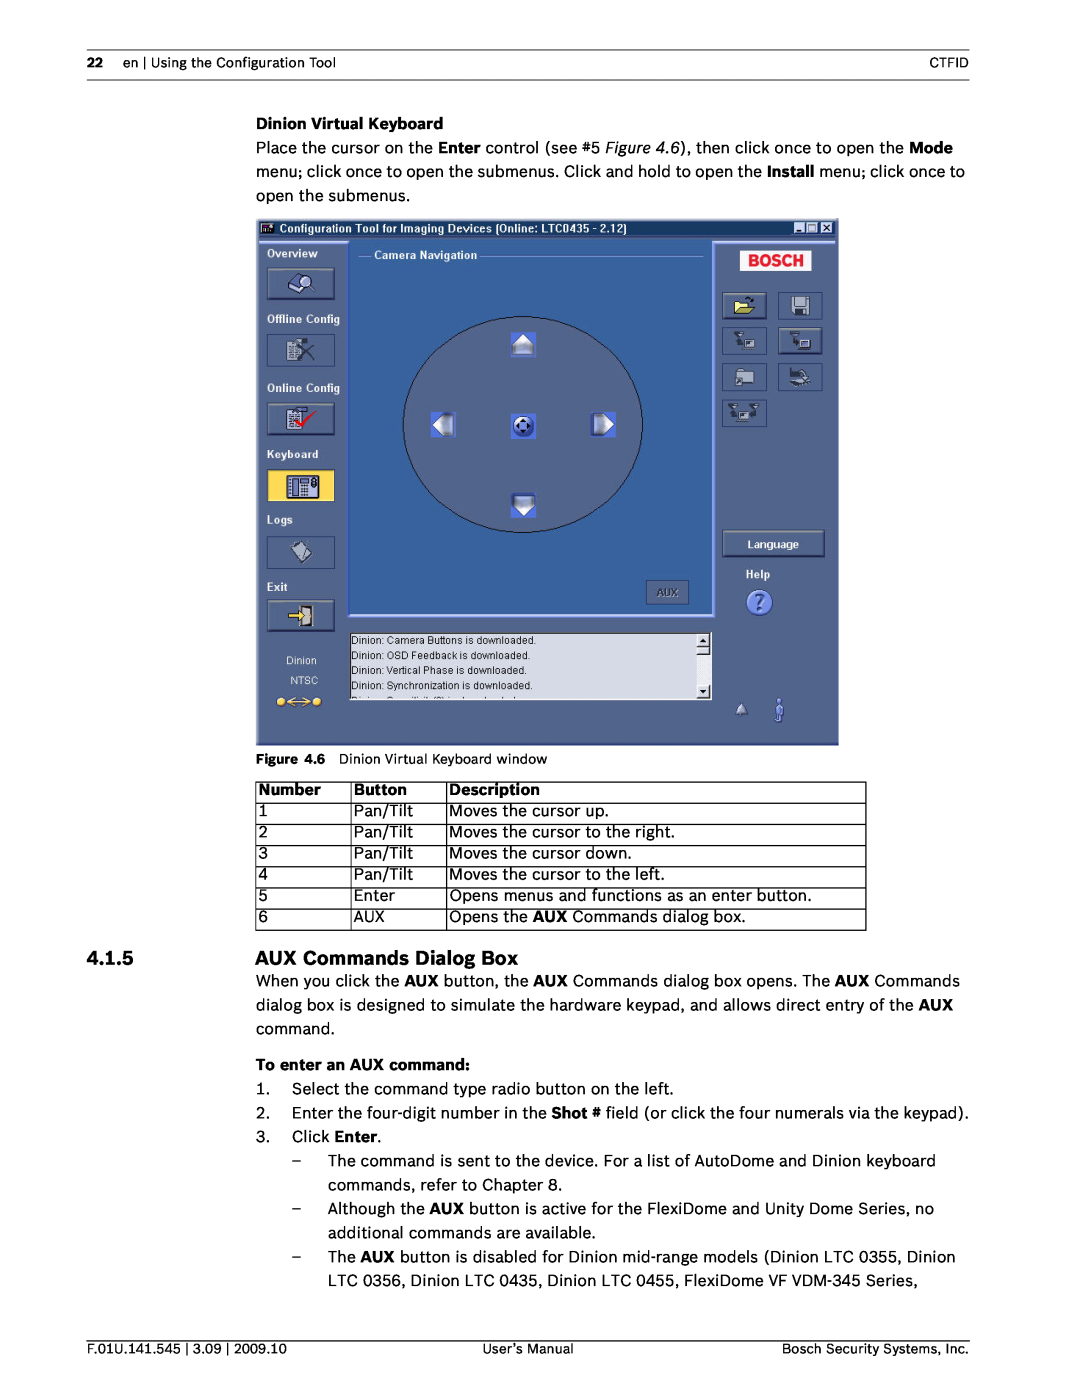 Bosch Appliances VP-CFGSFT user manual 4.1.5, AUX Commands Dialog Box, Dinion Virtual Keyboard, Number, Button, Description 